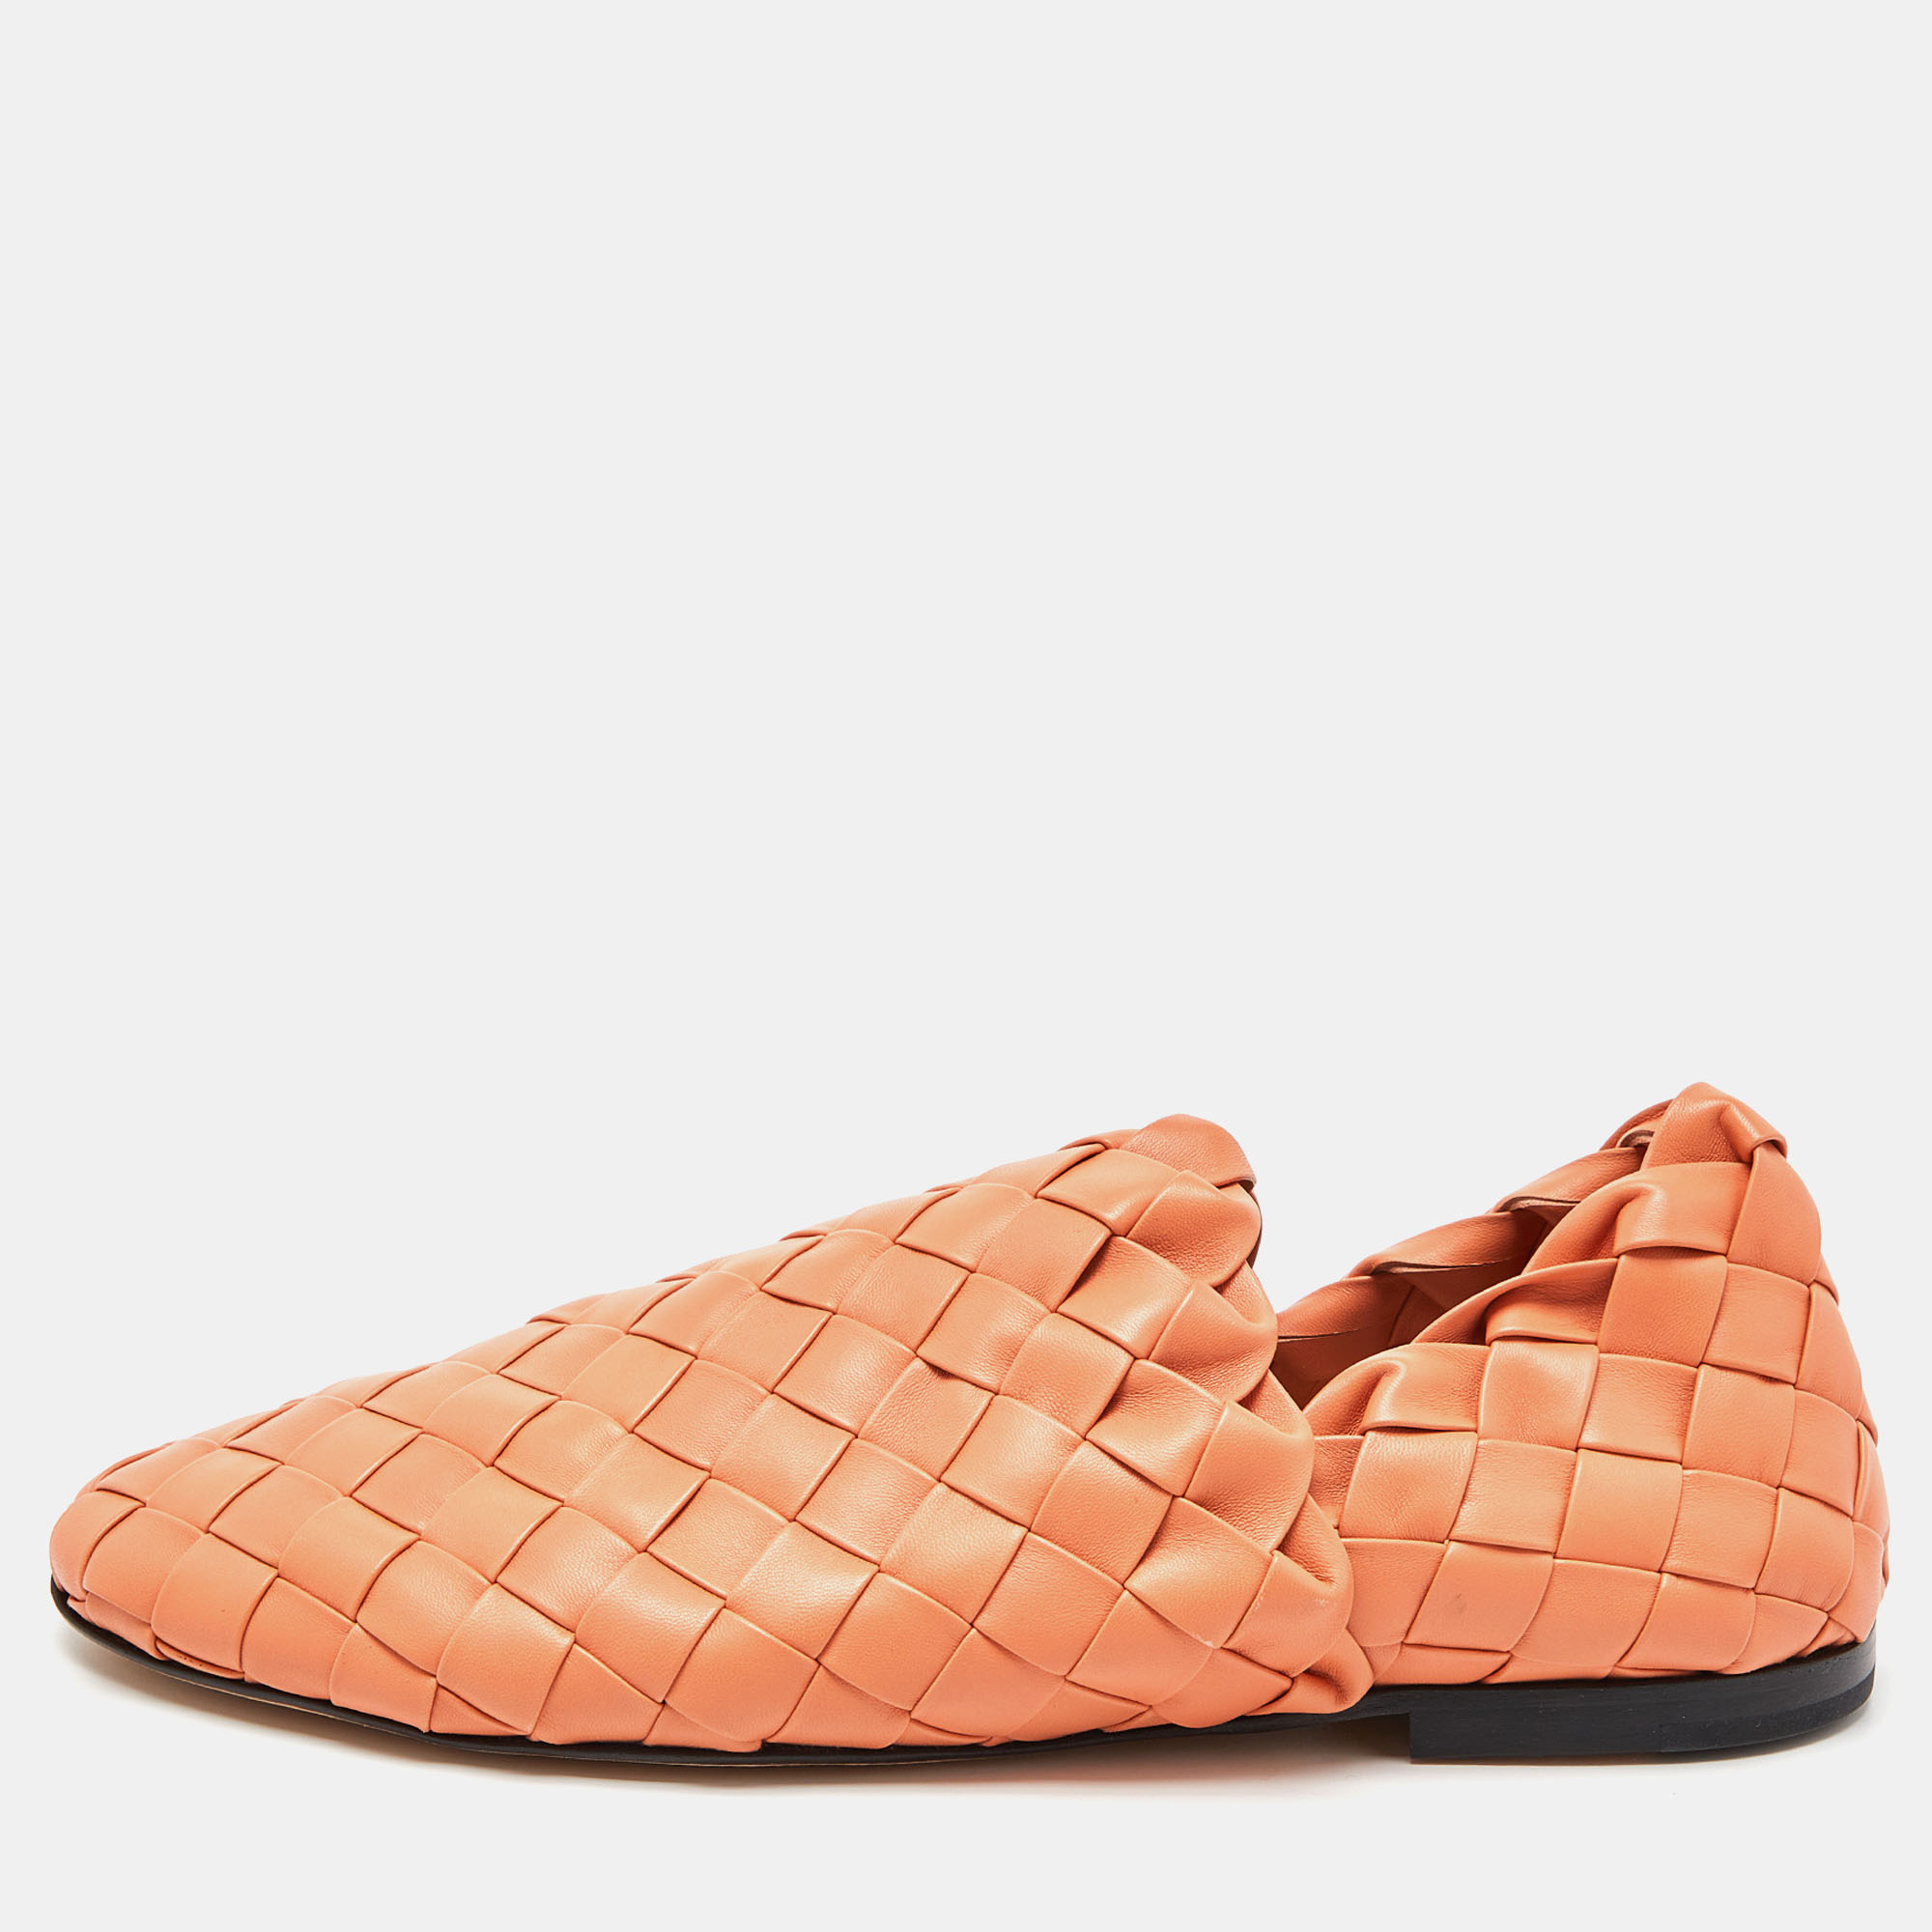 Bottega Veneta Orange Woven Leather Smoking Slippers Size  45